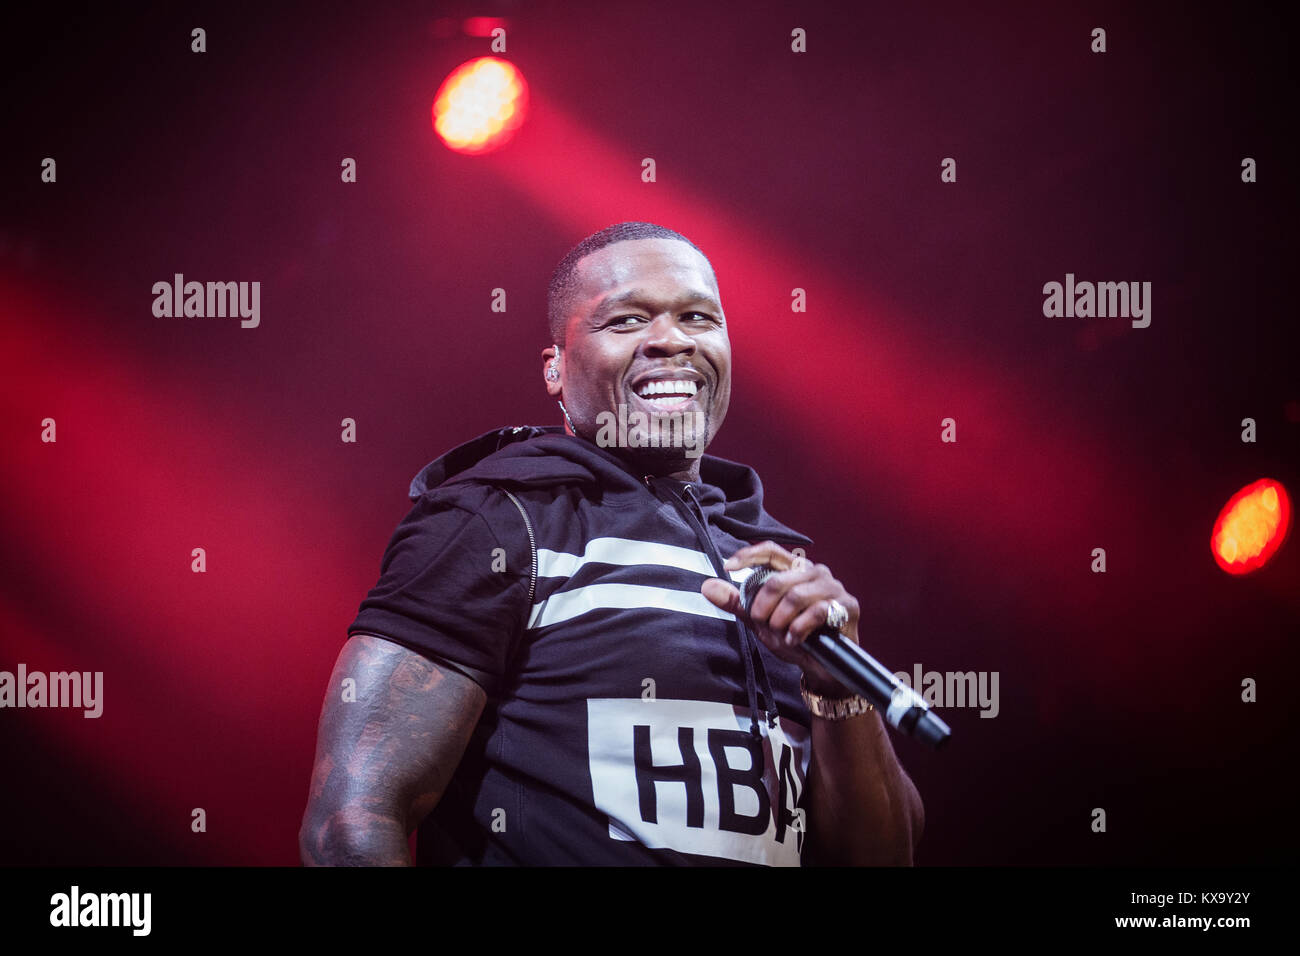 The American rapper, actor and entrepreneur 50 Cent performs a live concert at the Danish music festival Skanderborg Festival / Smukfest 2014. Denmark, 06/08 2014. Stock Photo